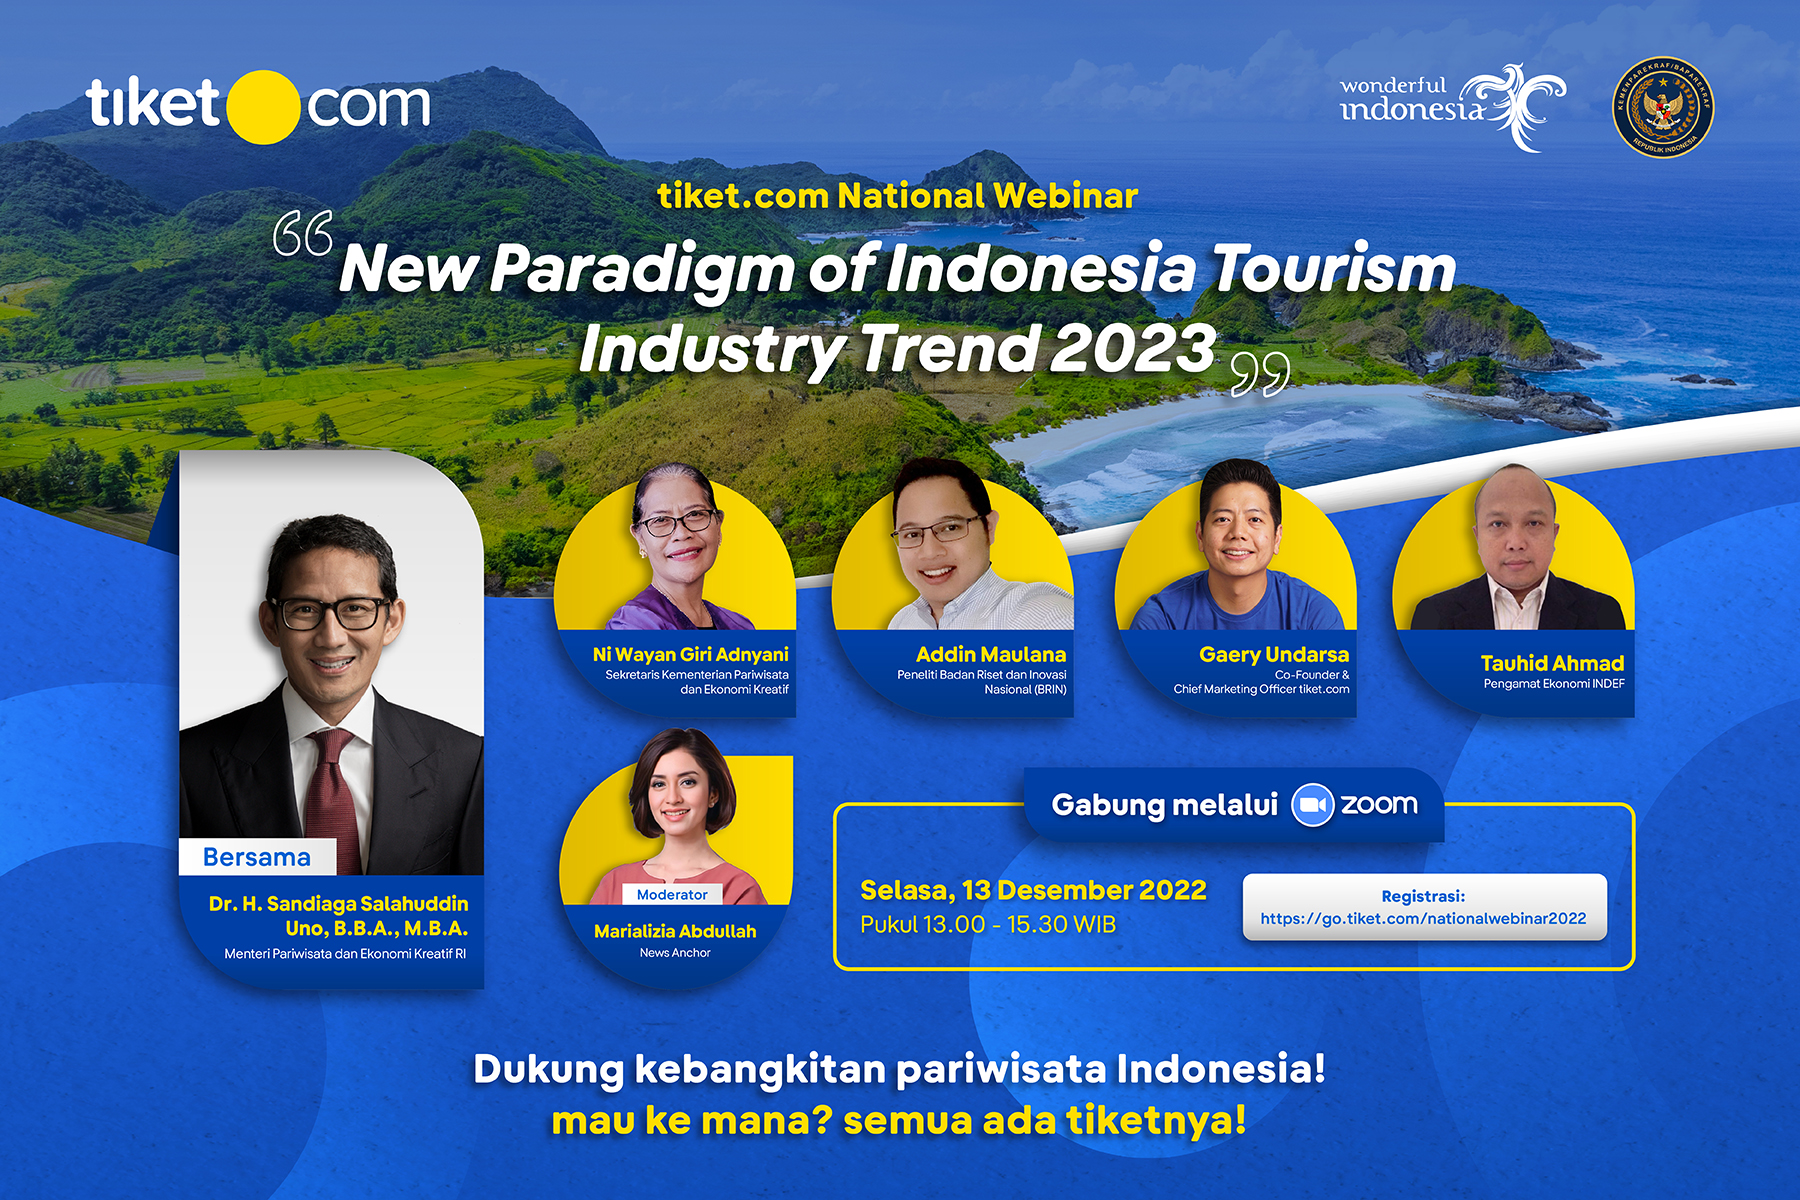 Webinar Nasional tiket.com bersama Pusat Kemenparekraf RI bertajuk “New Paradigm of Indonesia Tourism Industry Trend 2023”